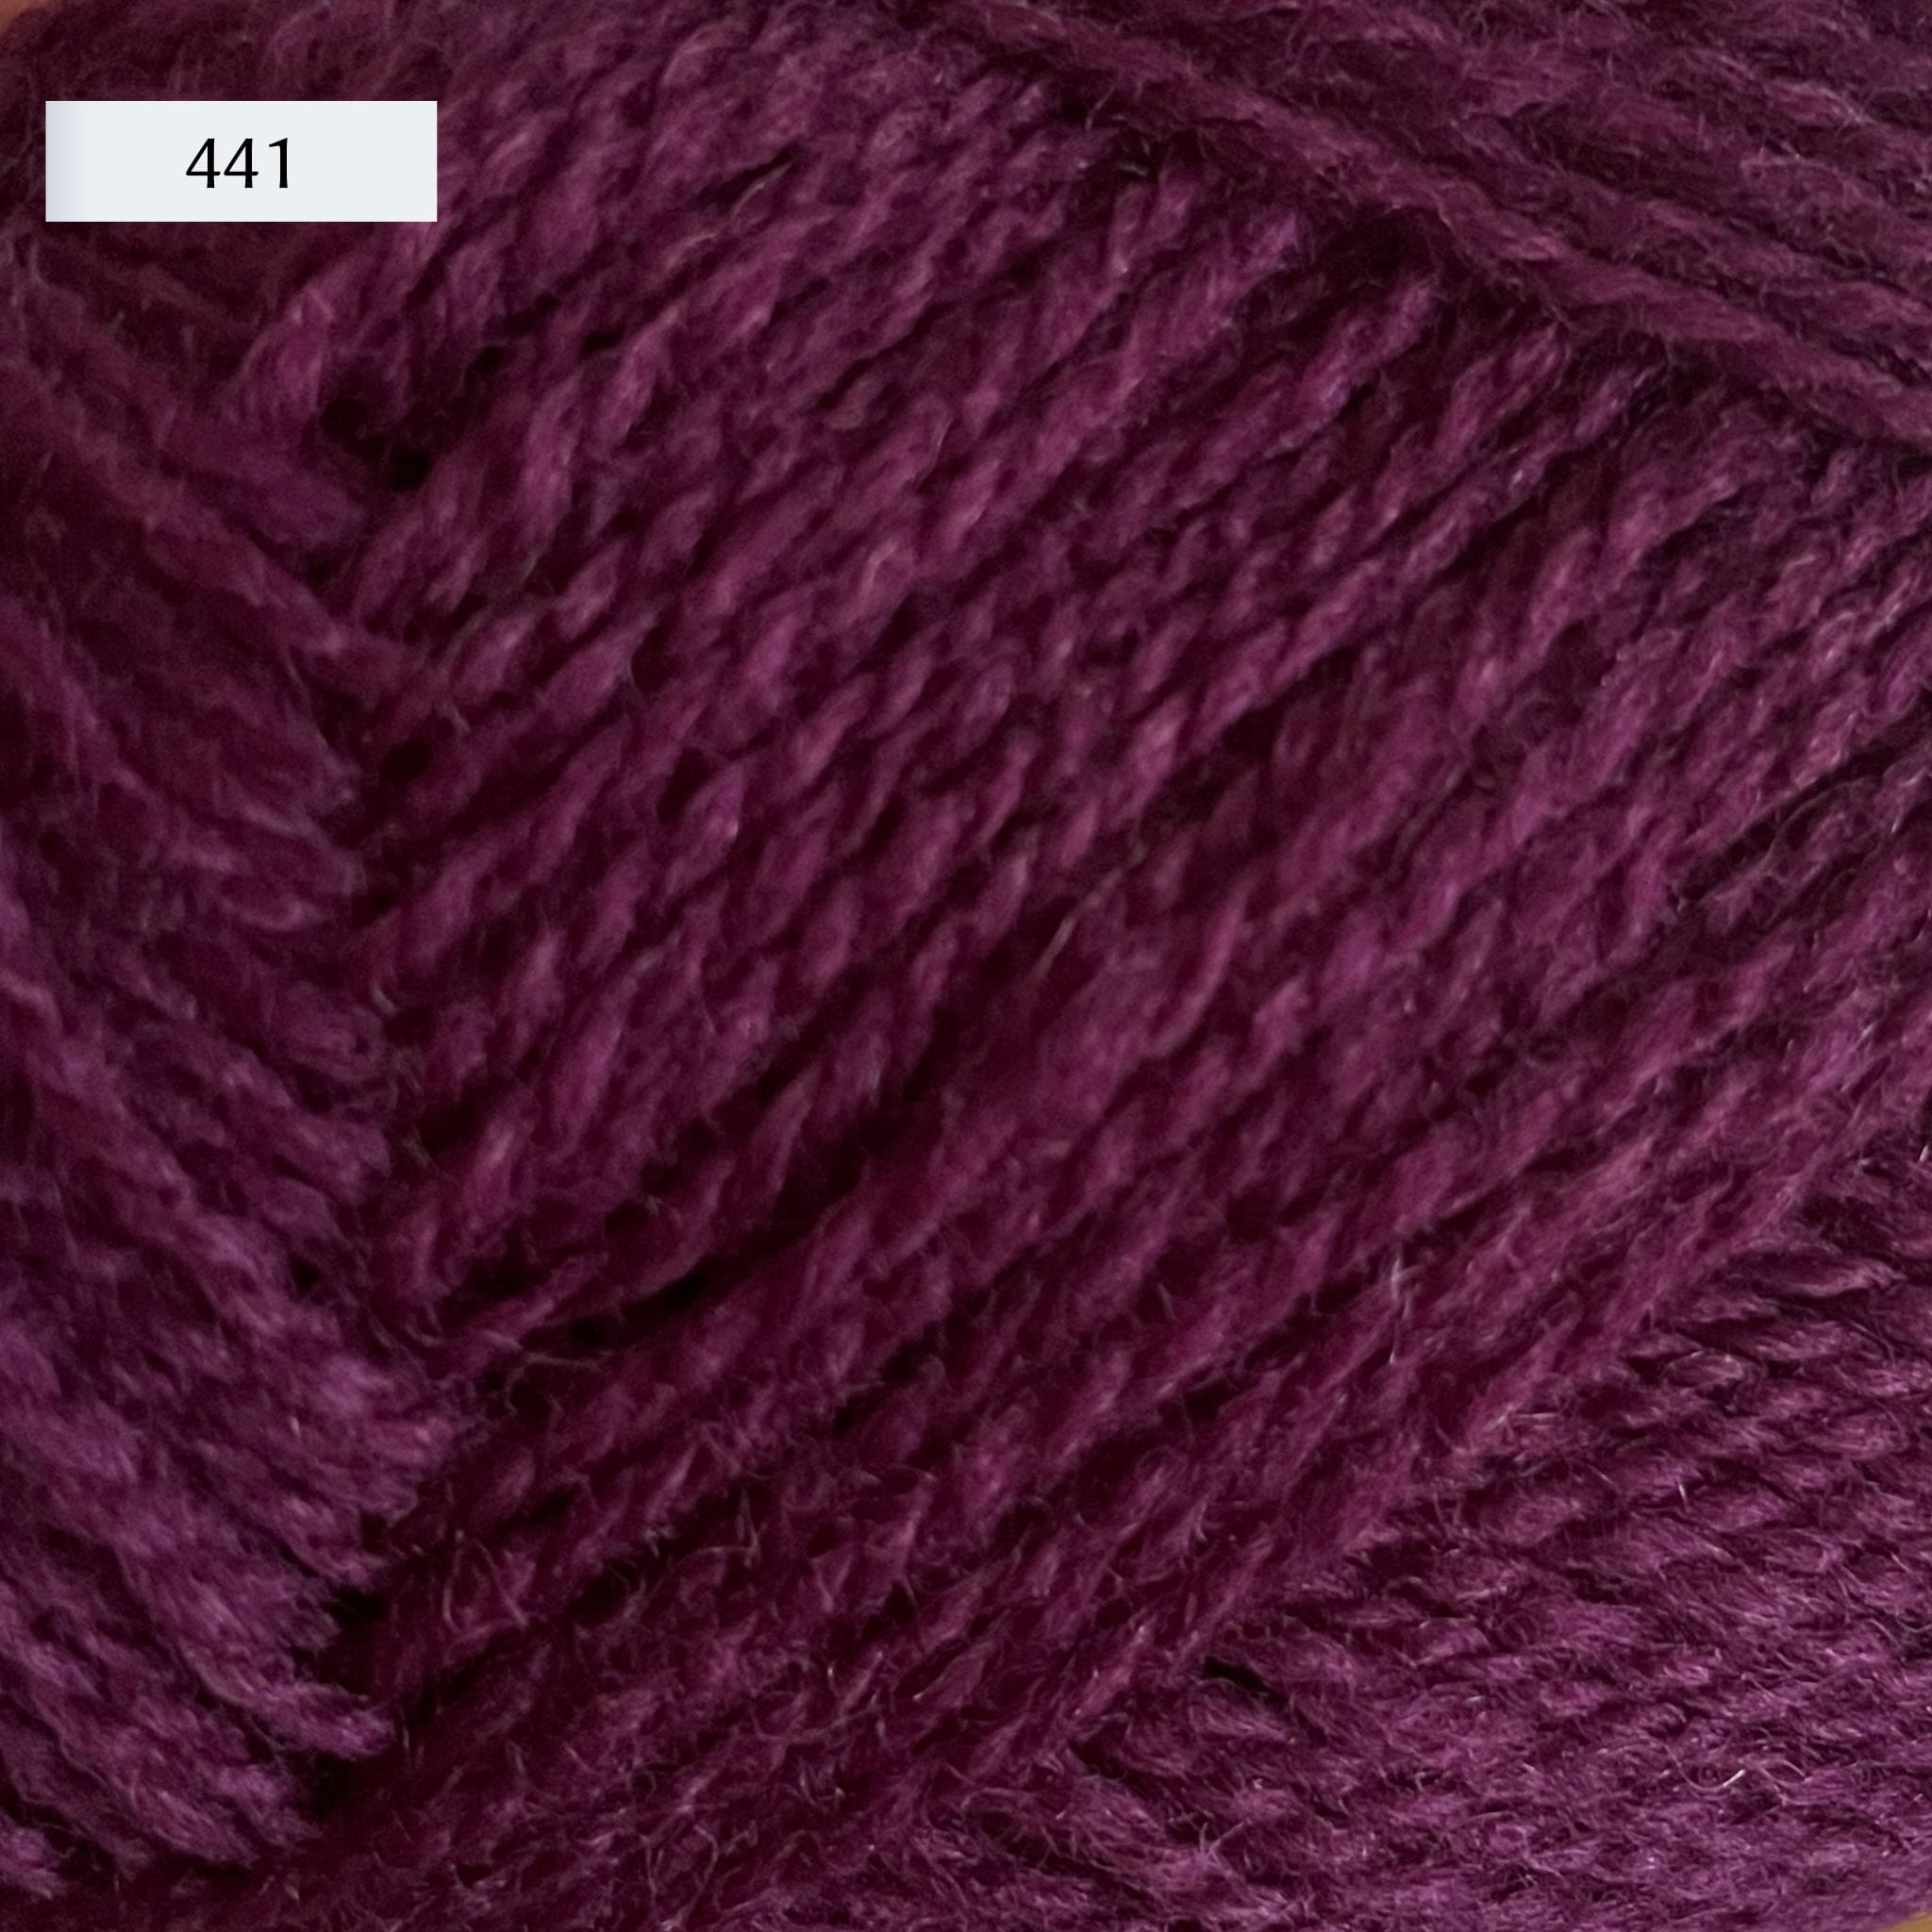 Rauma Finullgarn, a fingering/sport weight yarn, in color 441, a deep maroon-purple